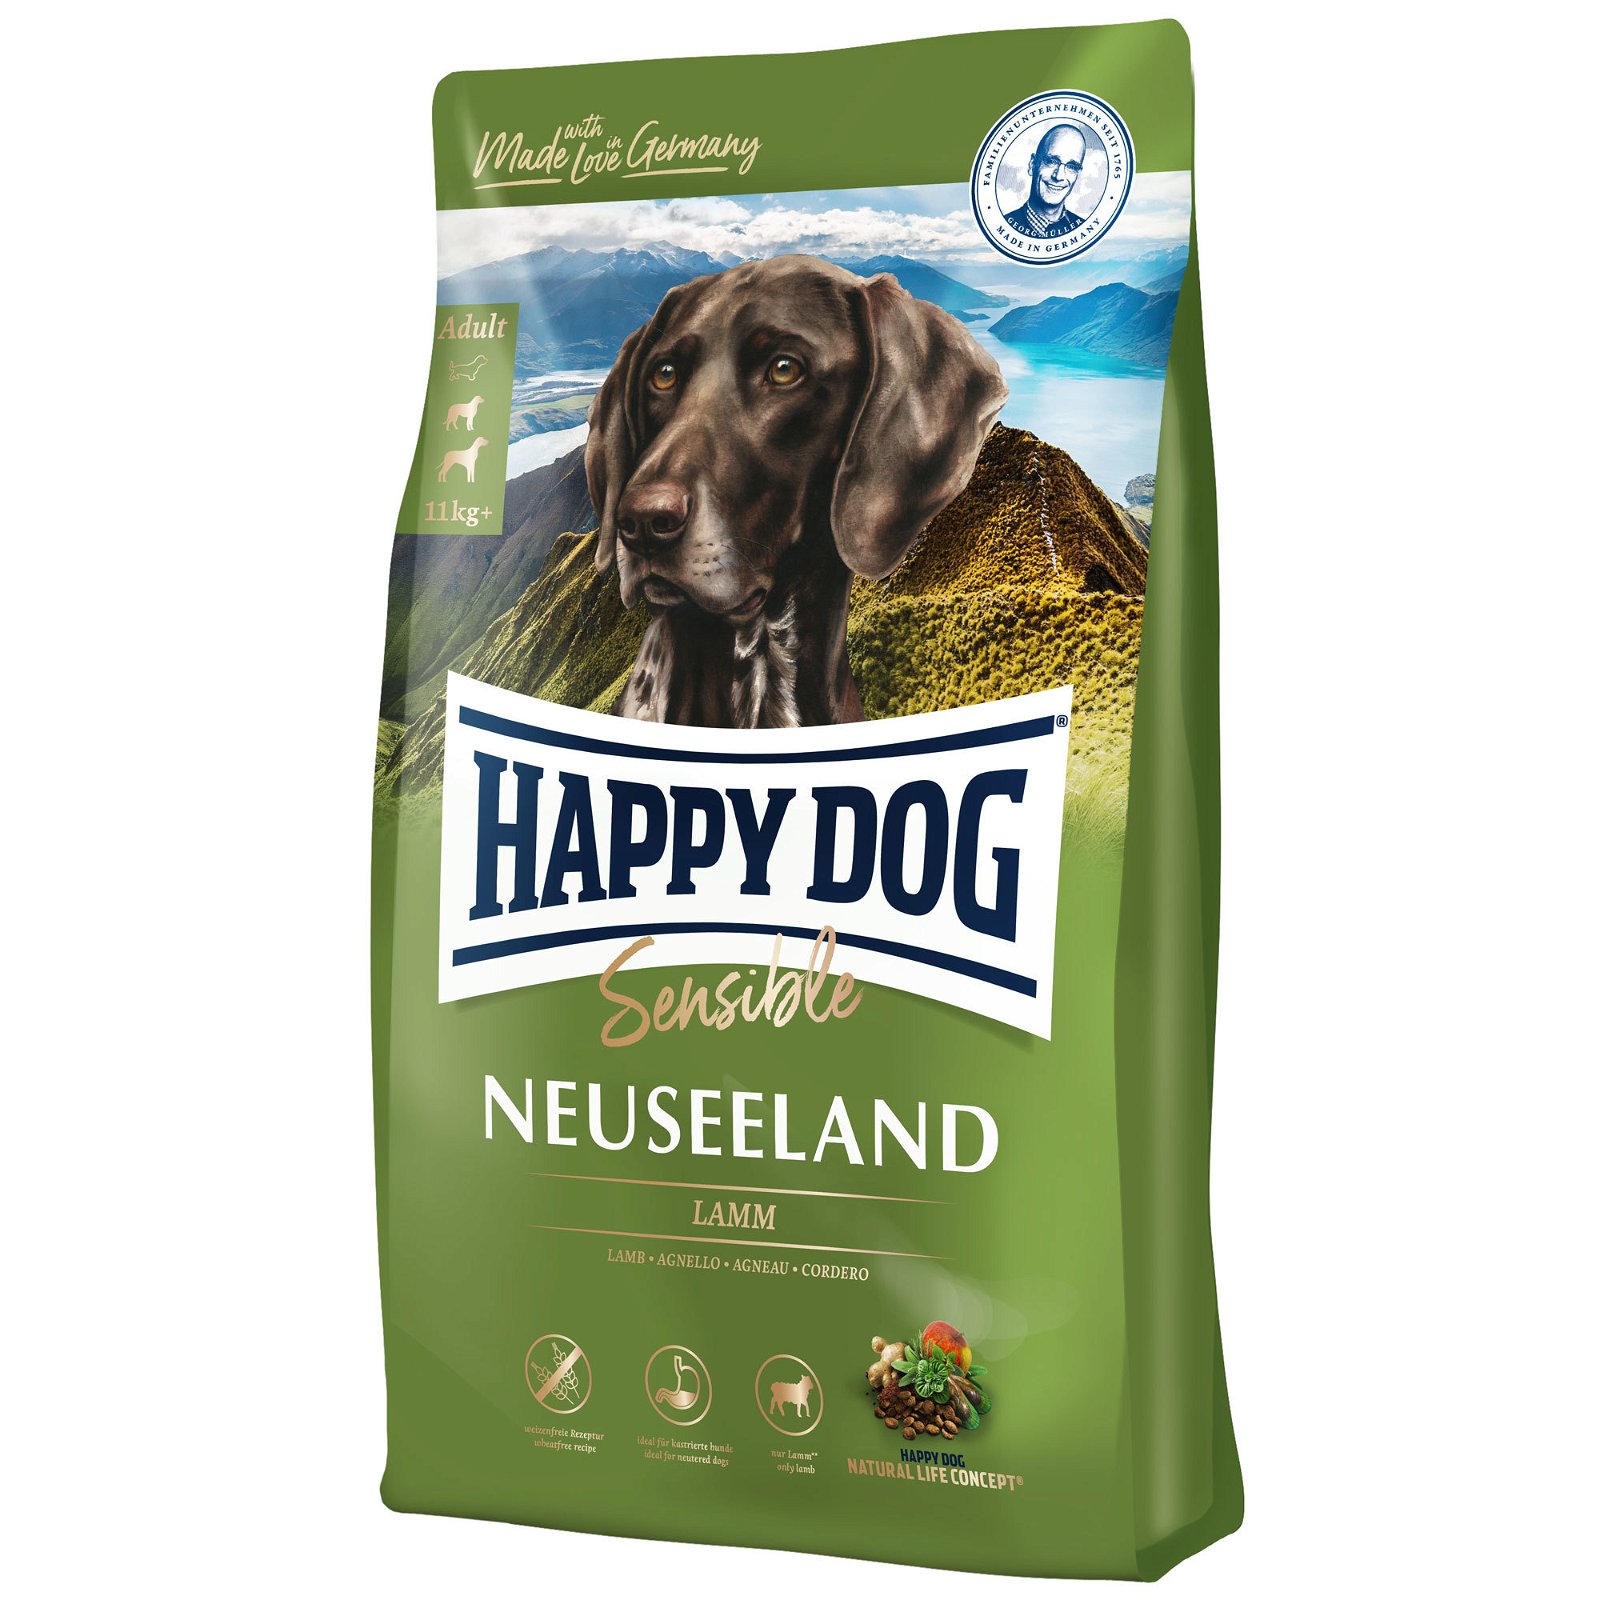 Happy Dog Sensible Neuseeland, Hundetrockenfutter, 300 g